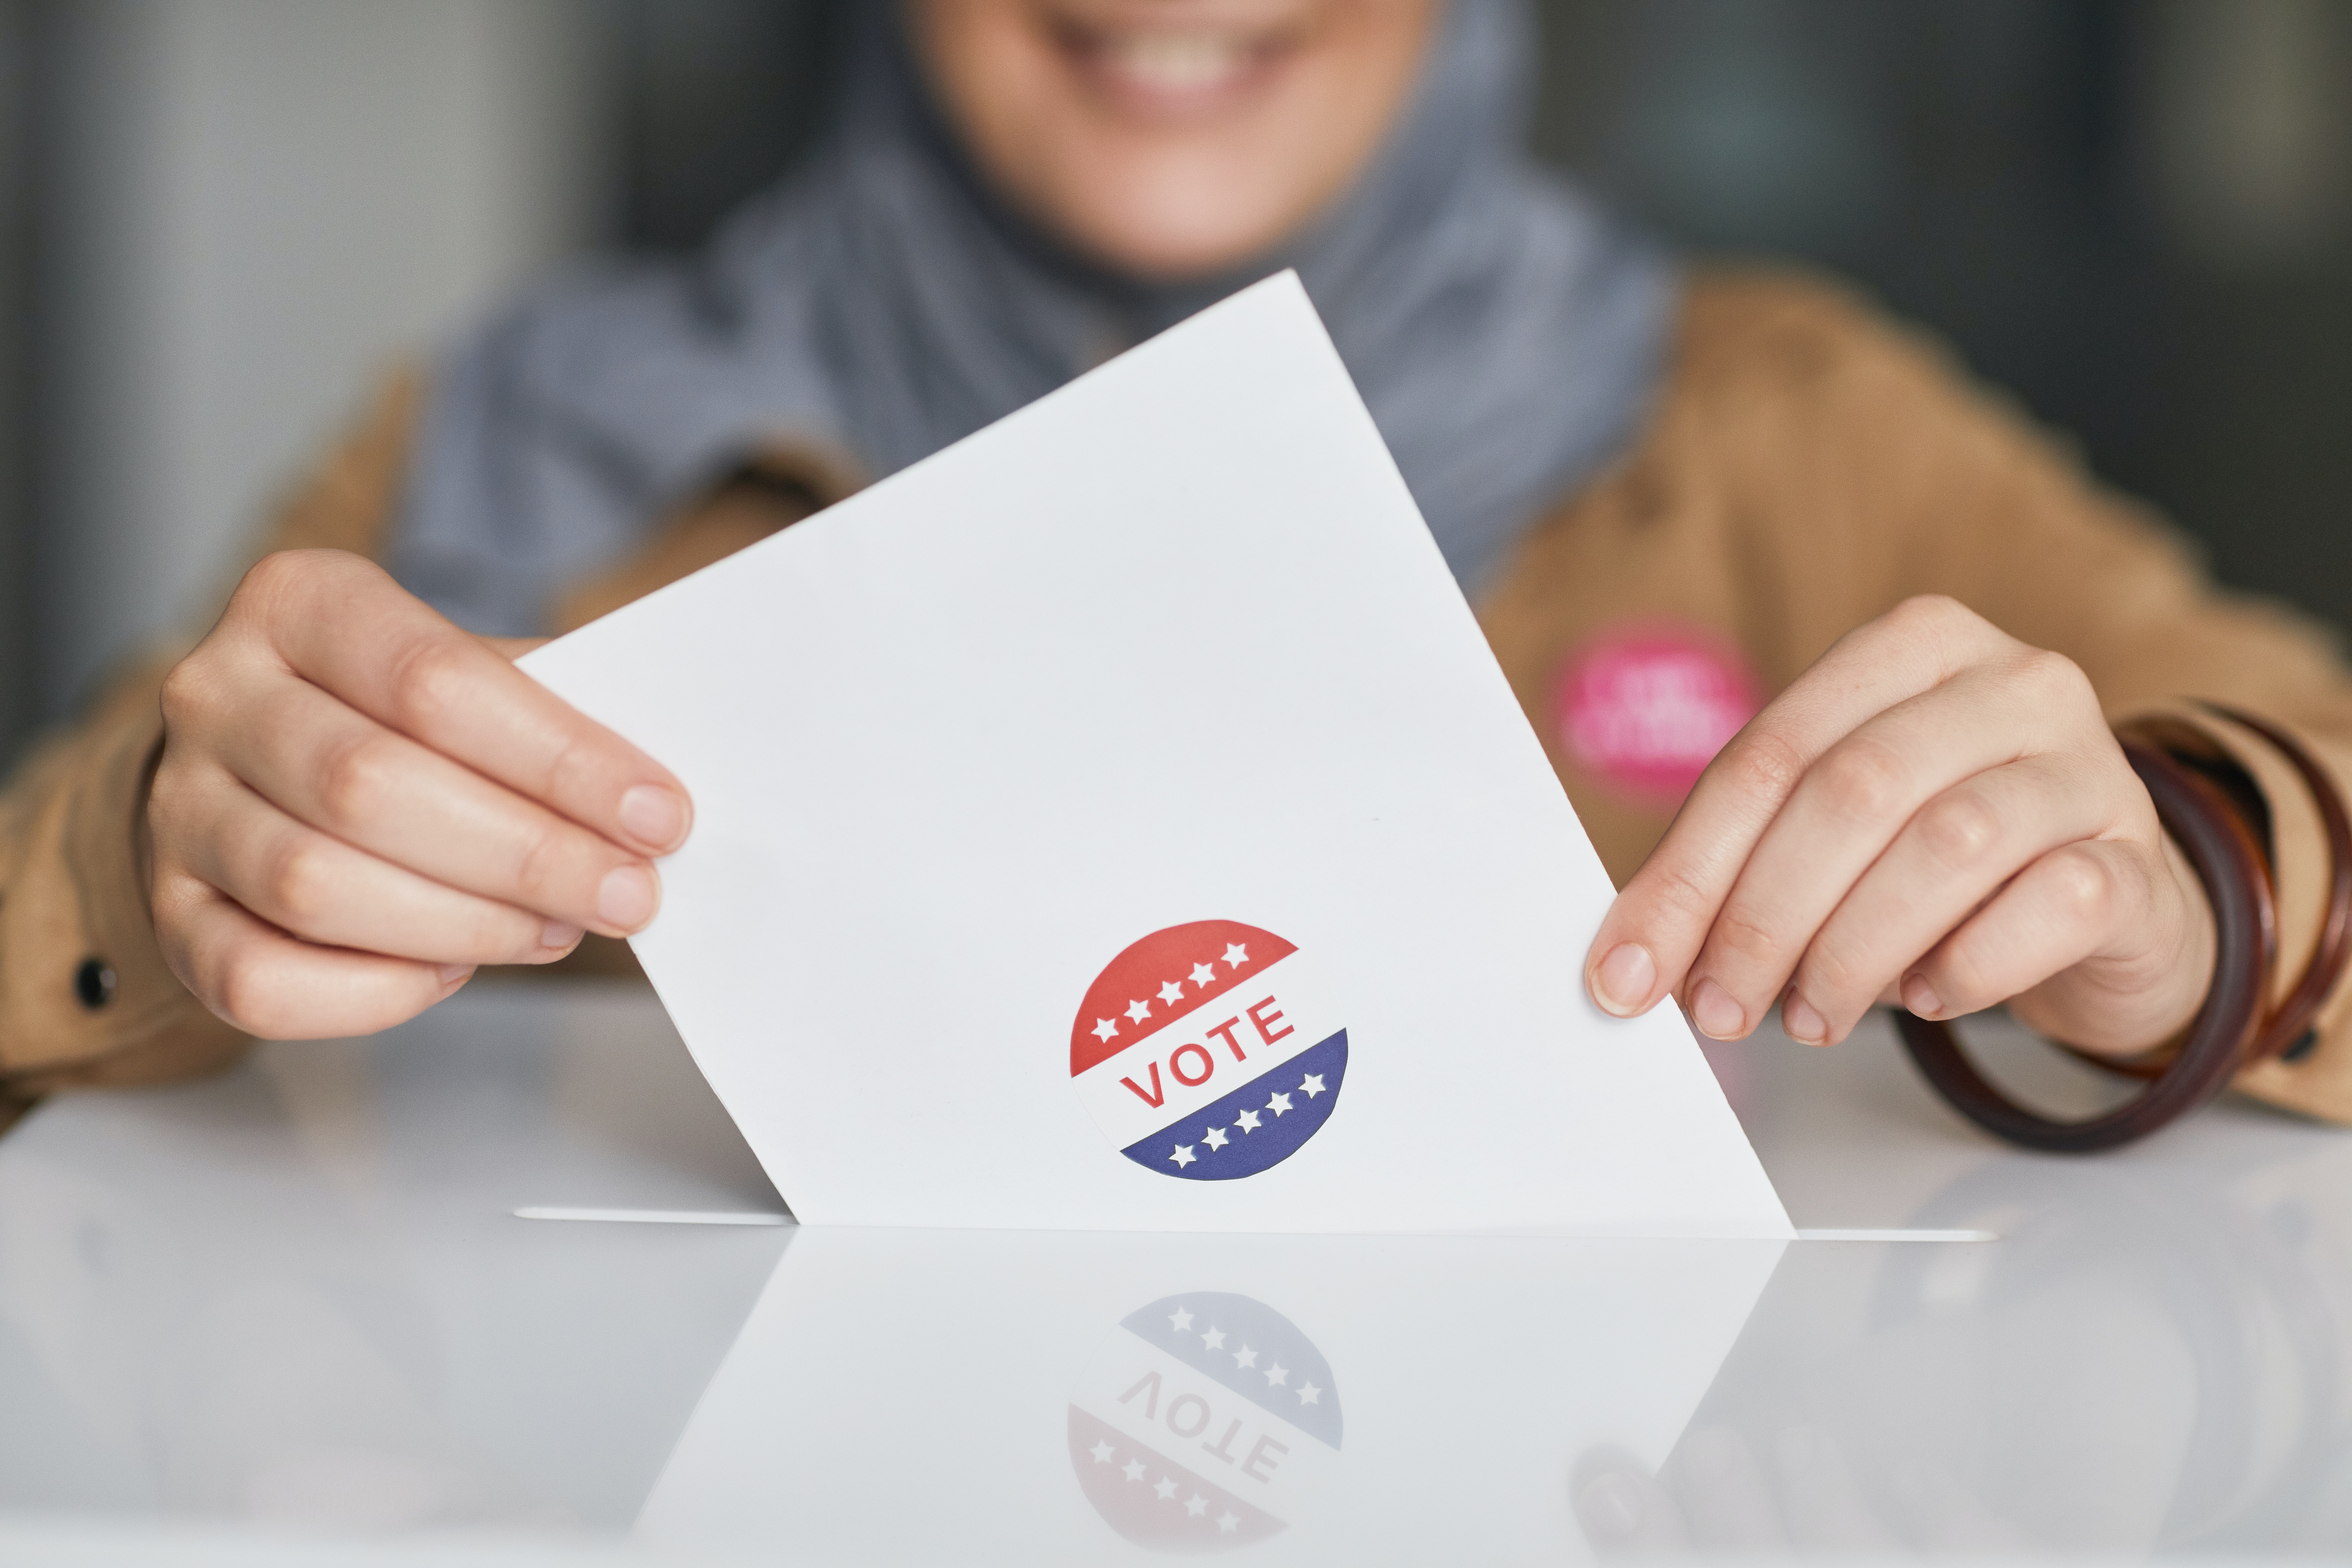 Female voter places a ballot into box.